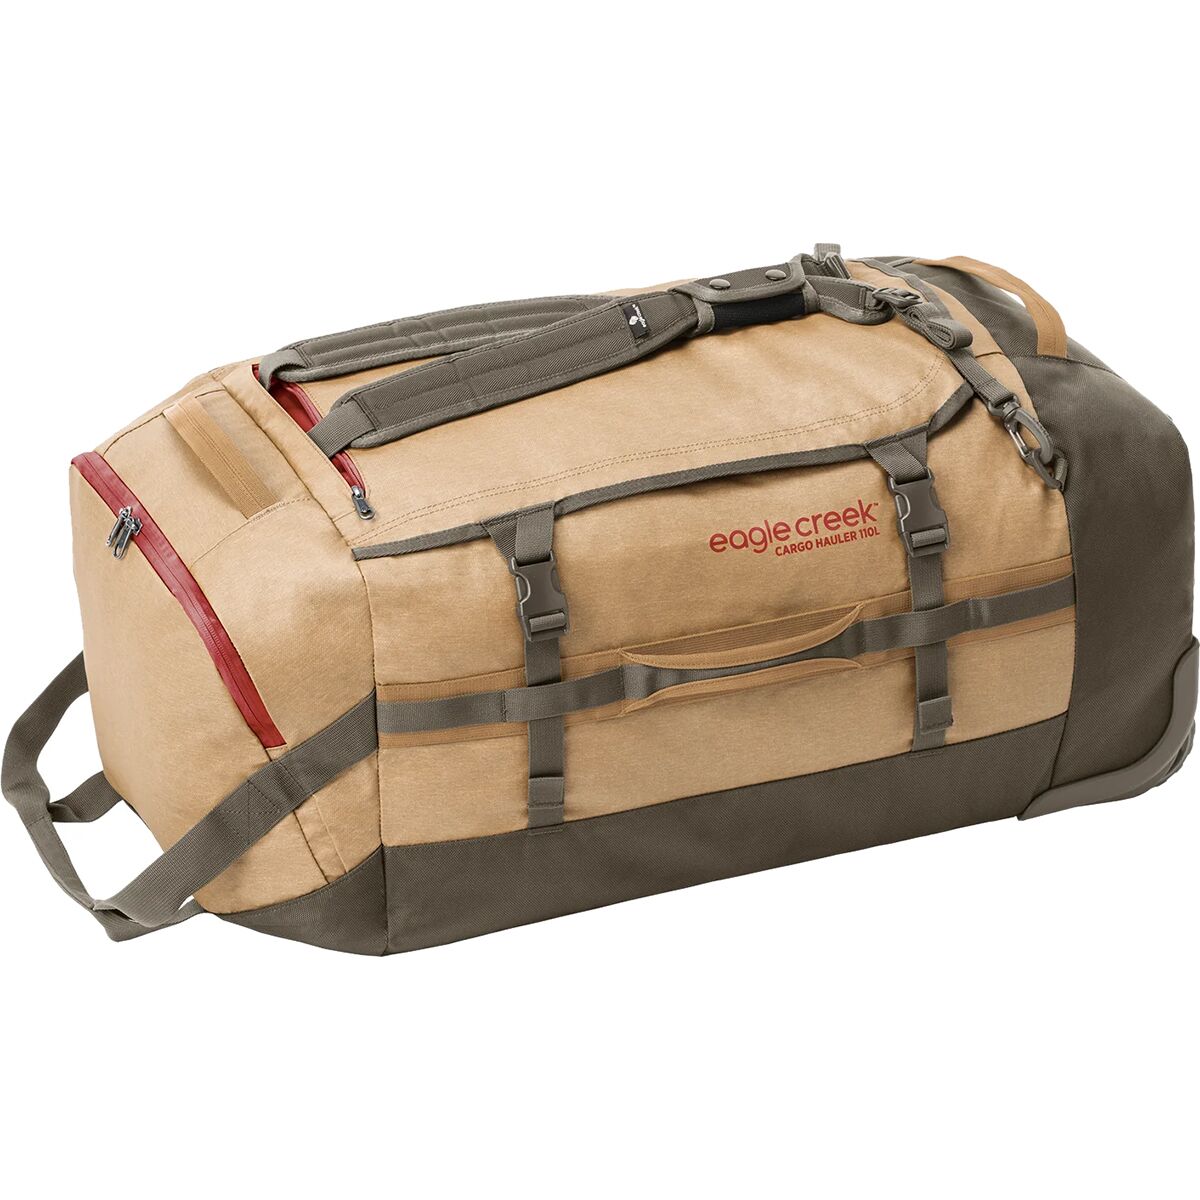 Cargo Hauler 110L Wheeled Duffel Bag